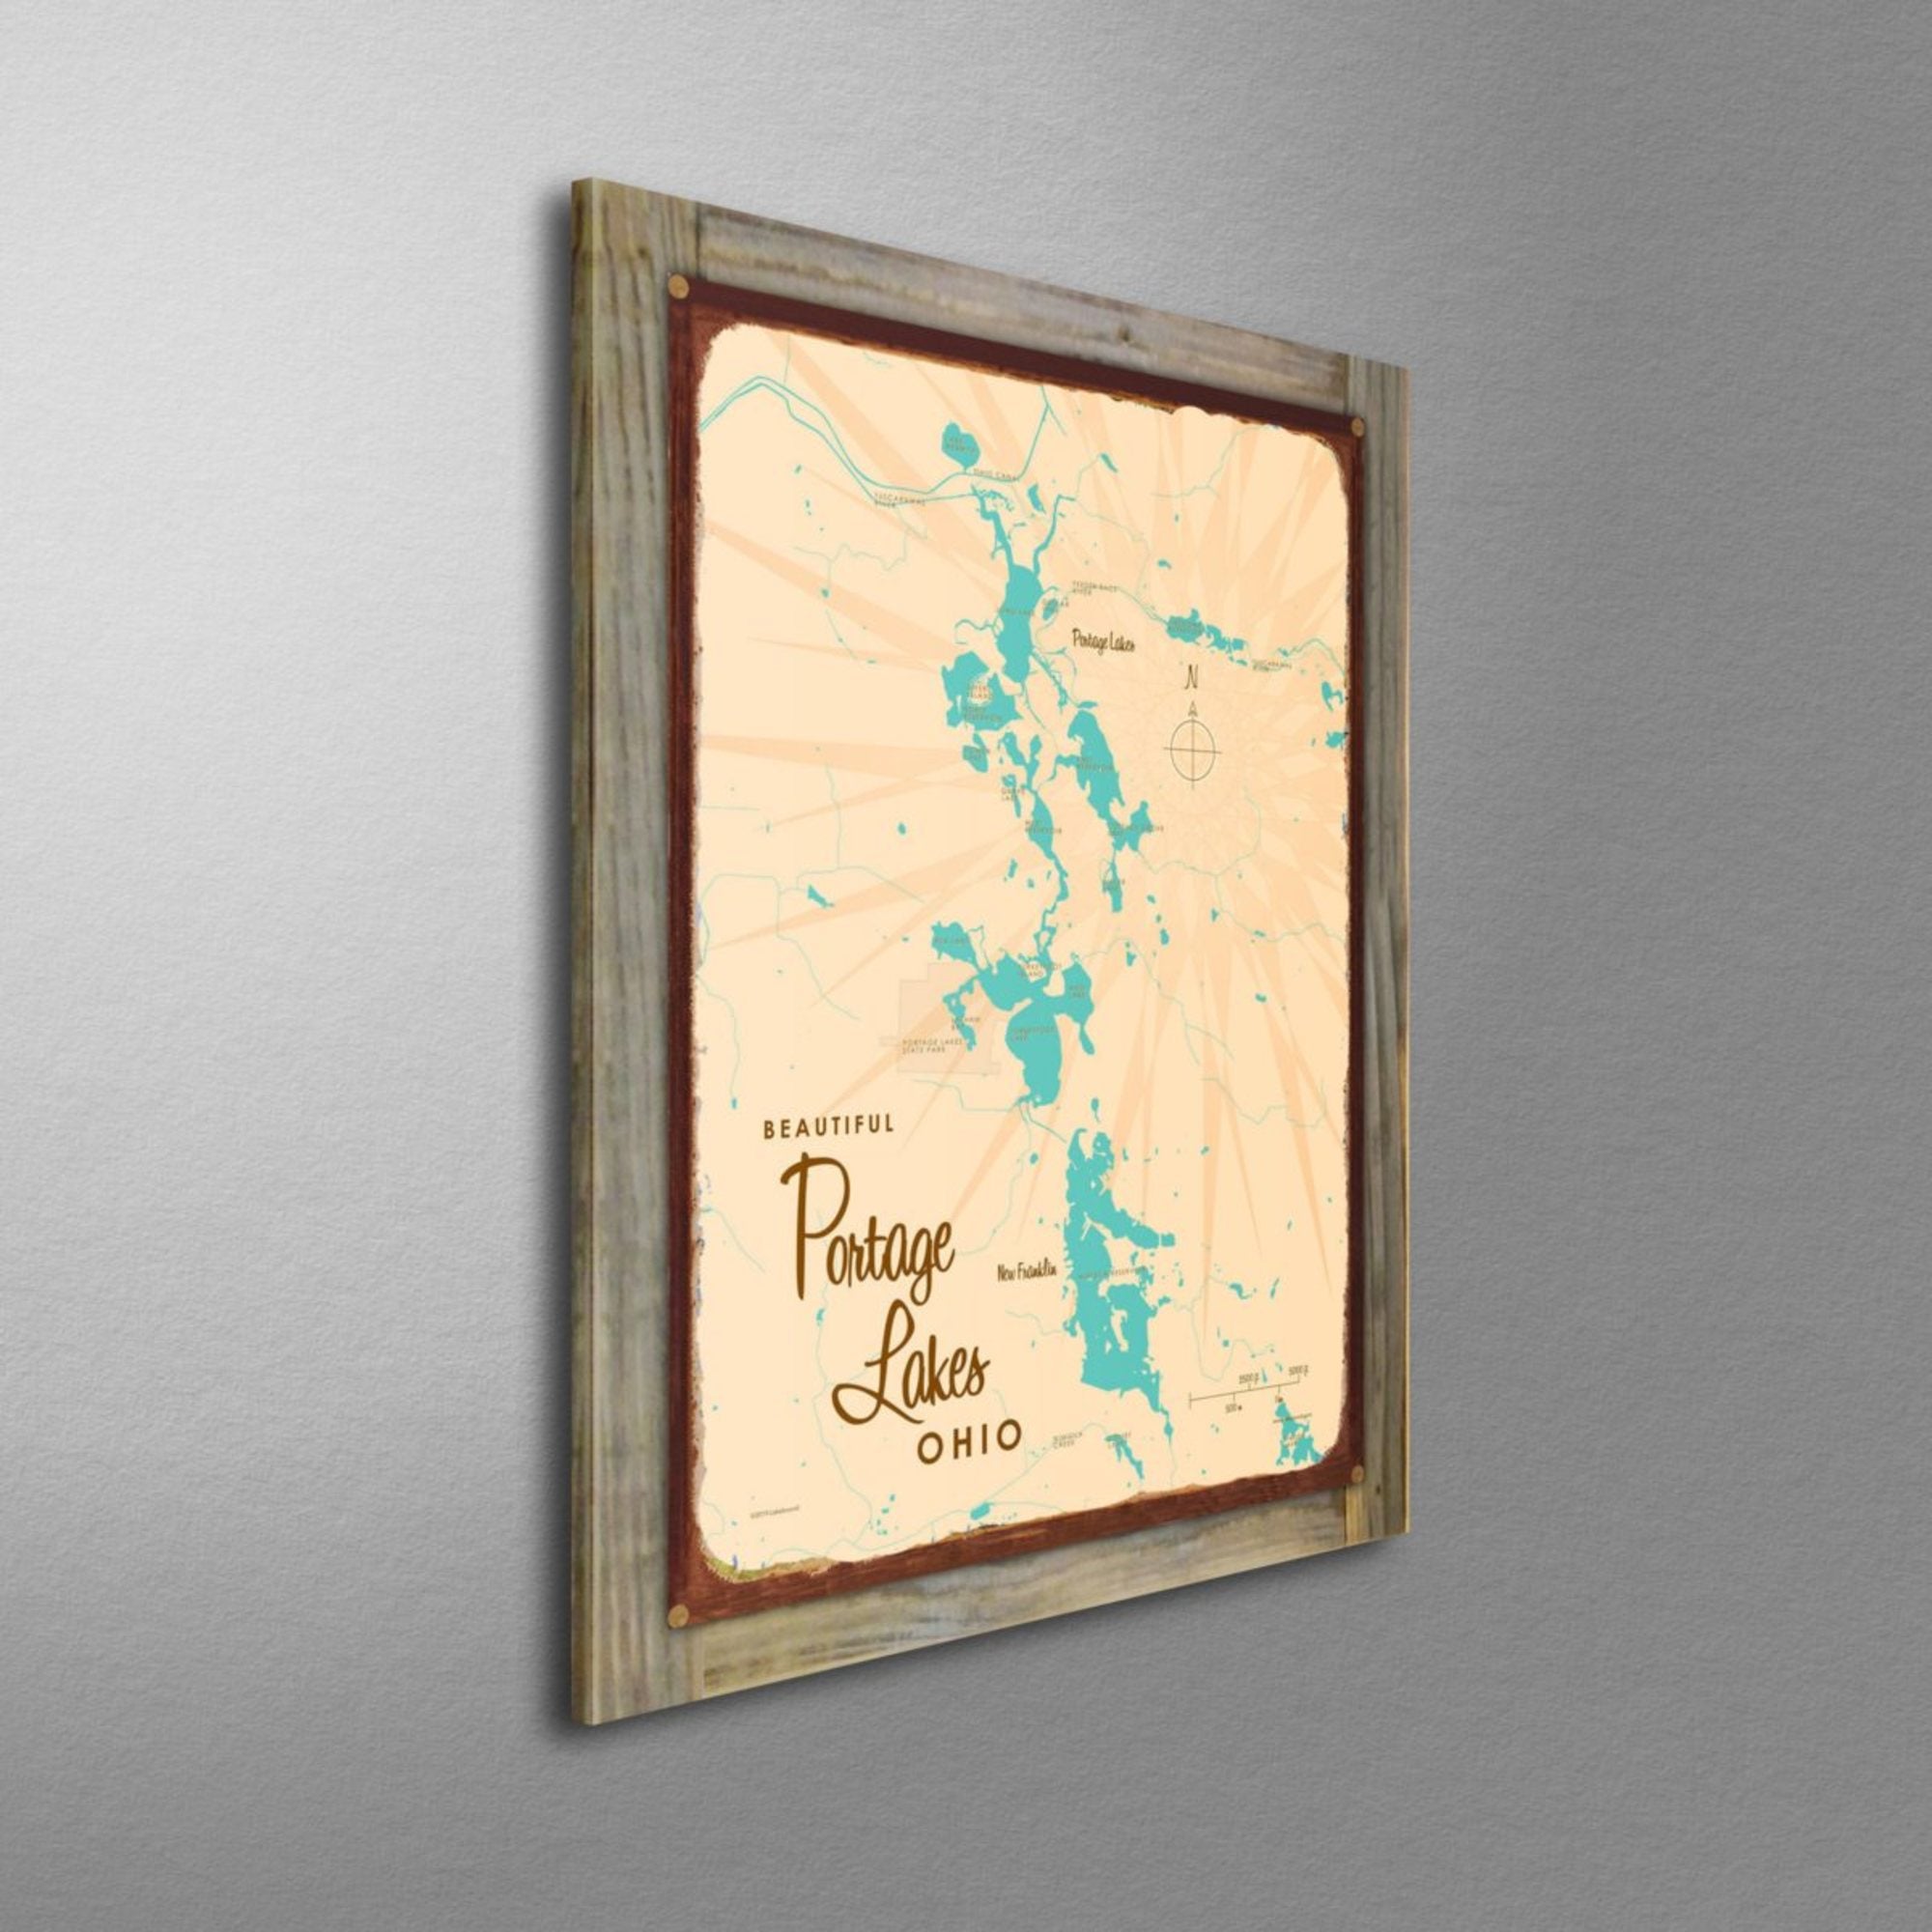 Portage Lakes Ohio, Wood-Mounted Rustic Metal Sign Map Art